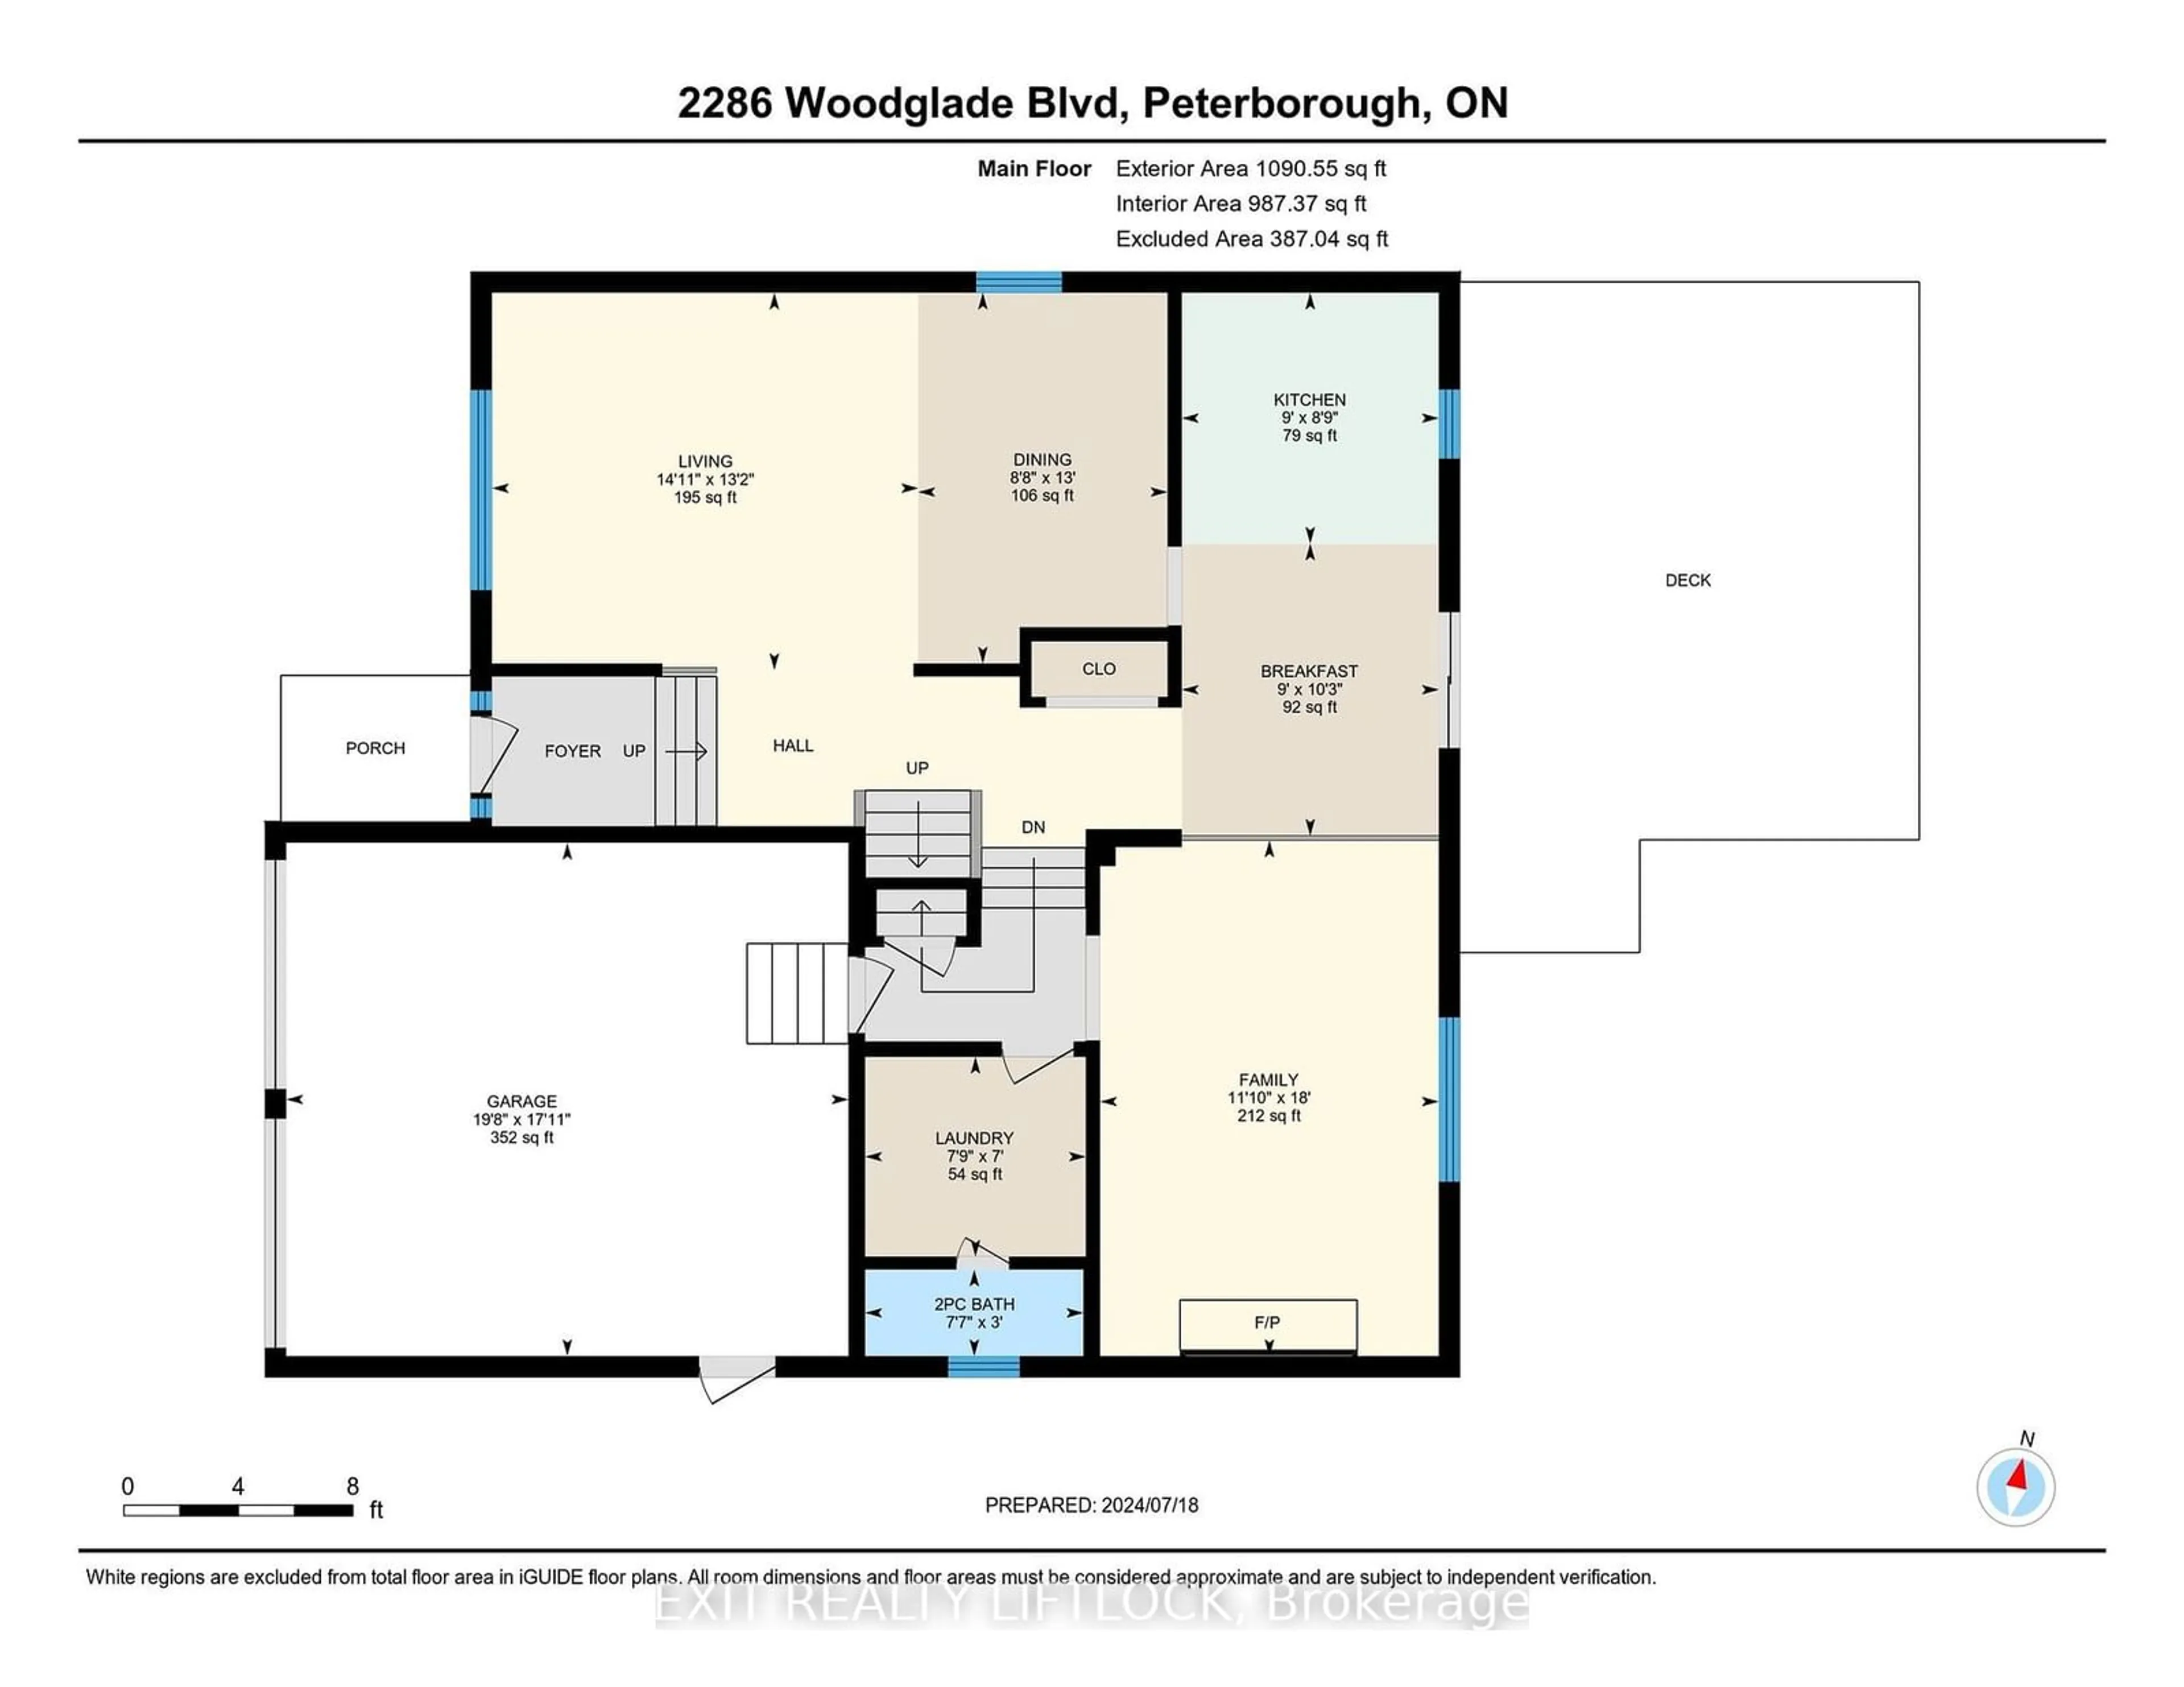 Floor plan for 2286 Woodglade Blvd, Peterborough Ontario K9K 1T9